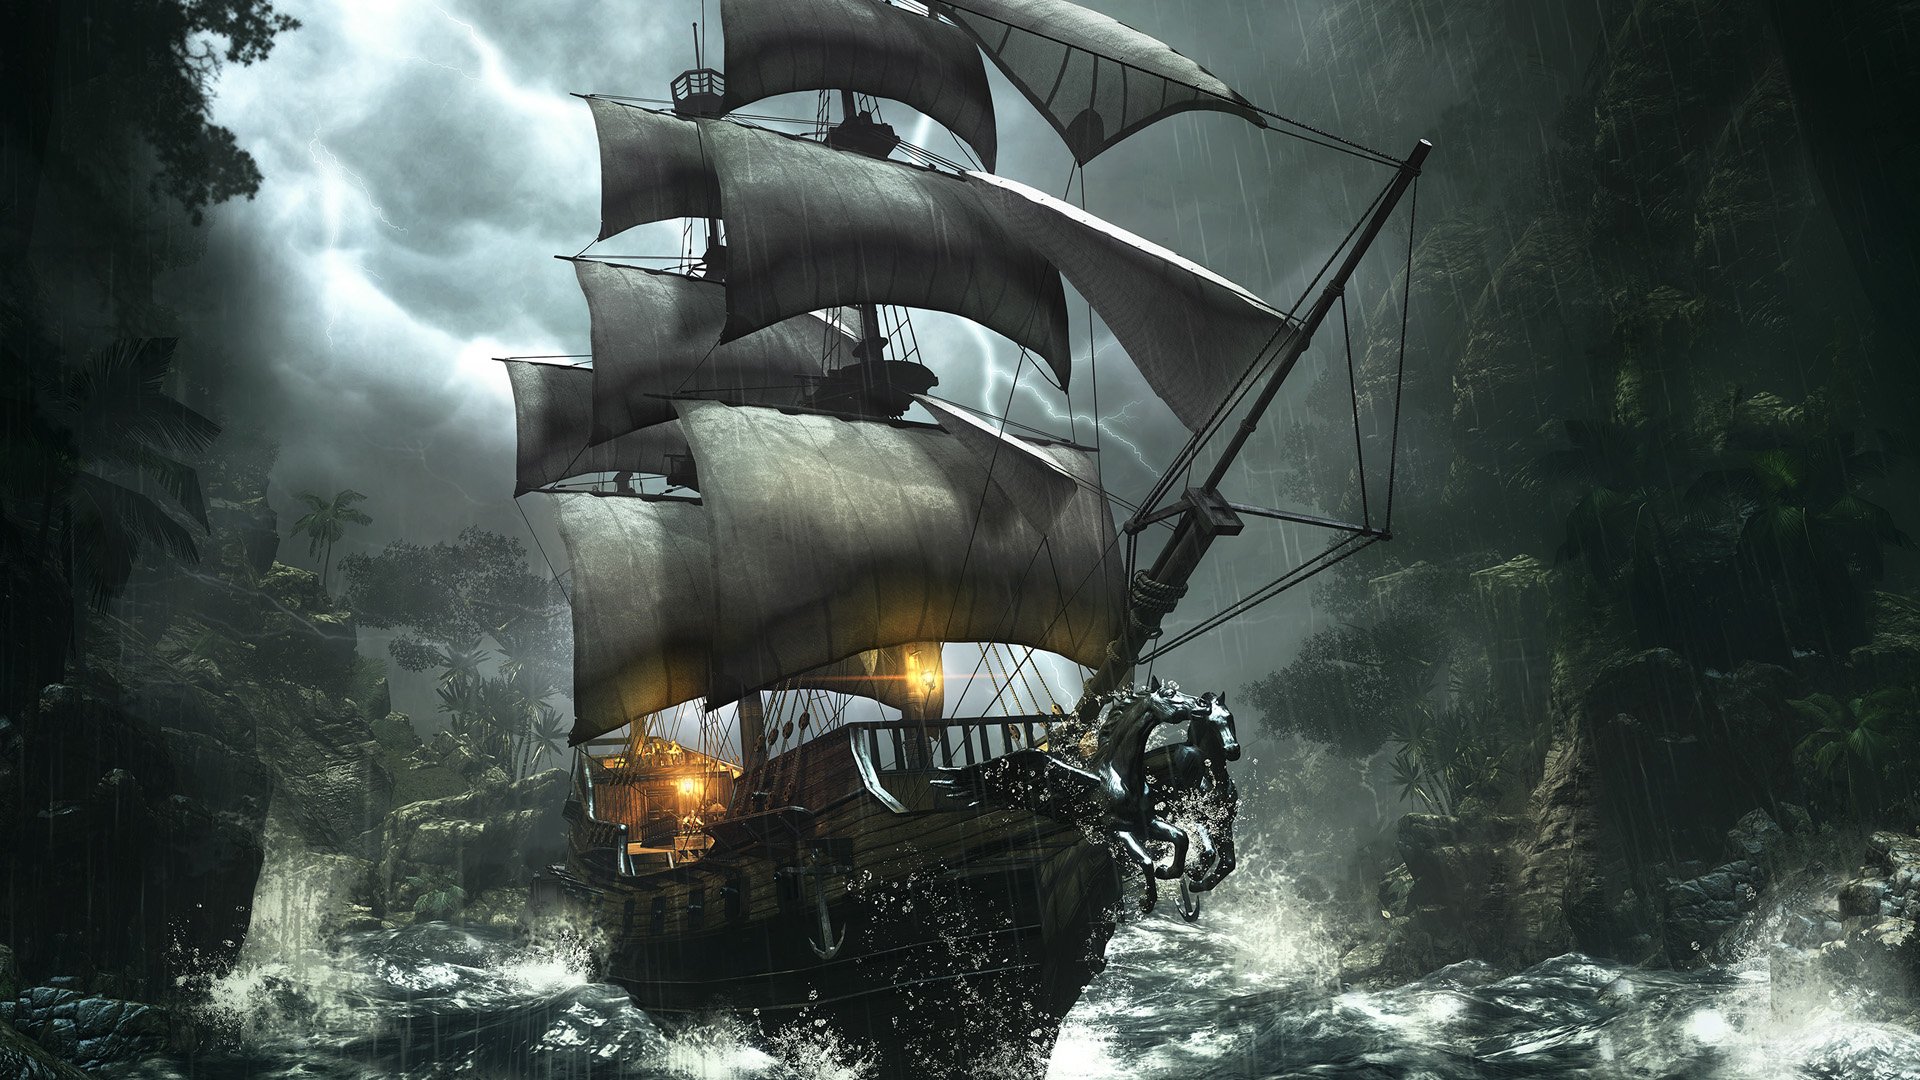 Pirate Ship Wallpaper iPhone With HD Desktop